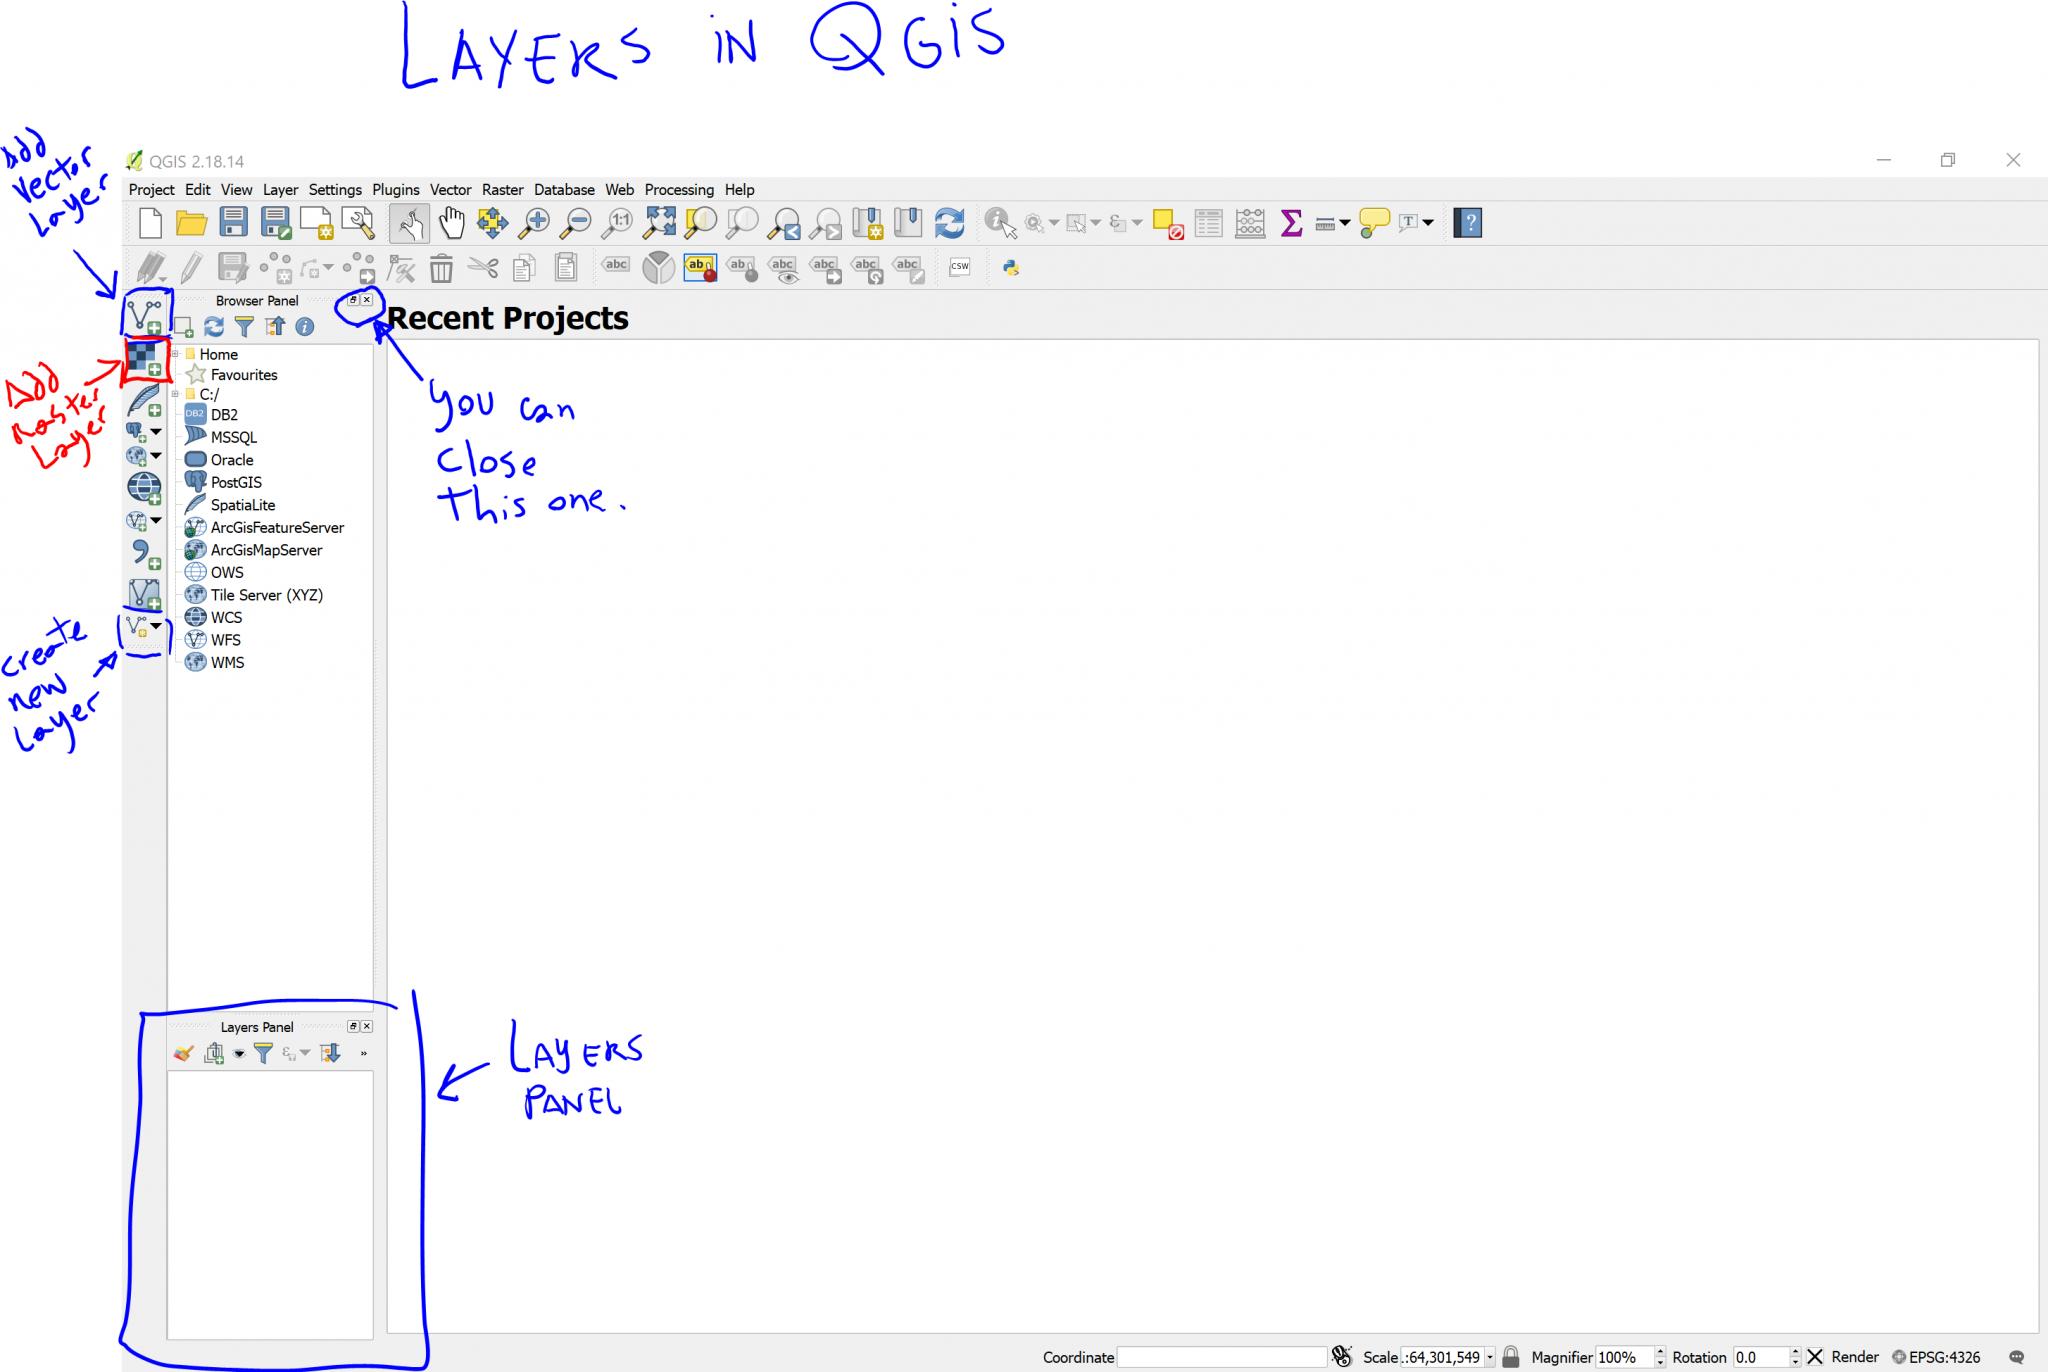 Layers in QGIS